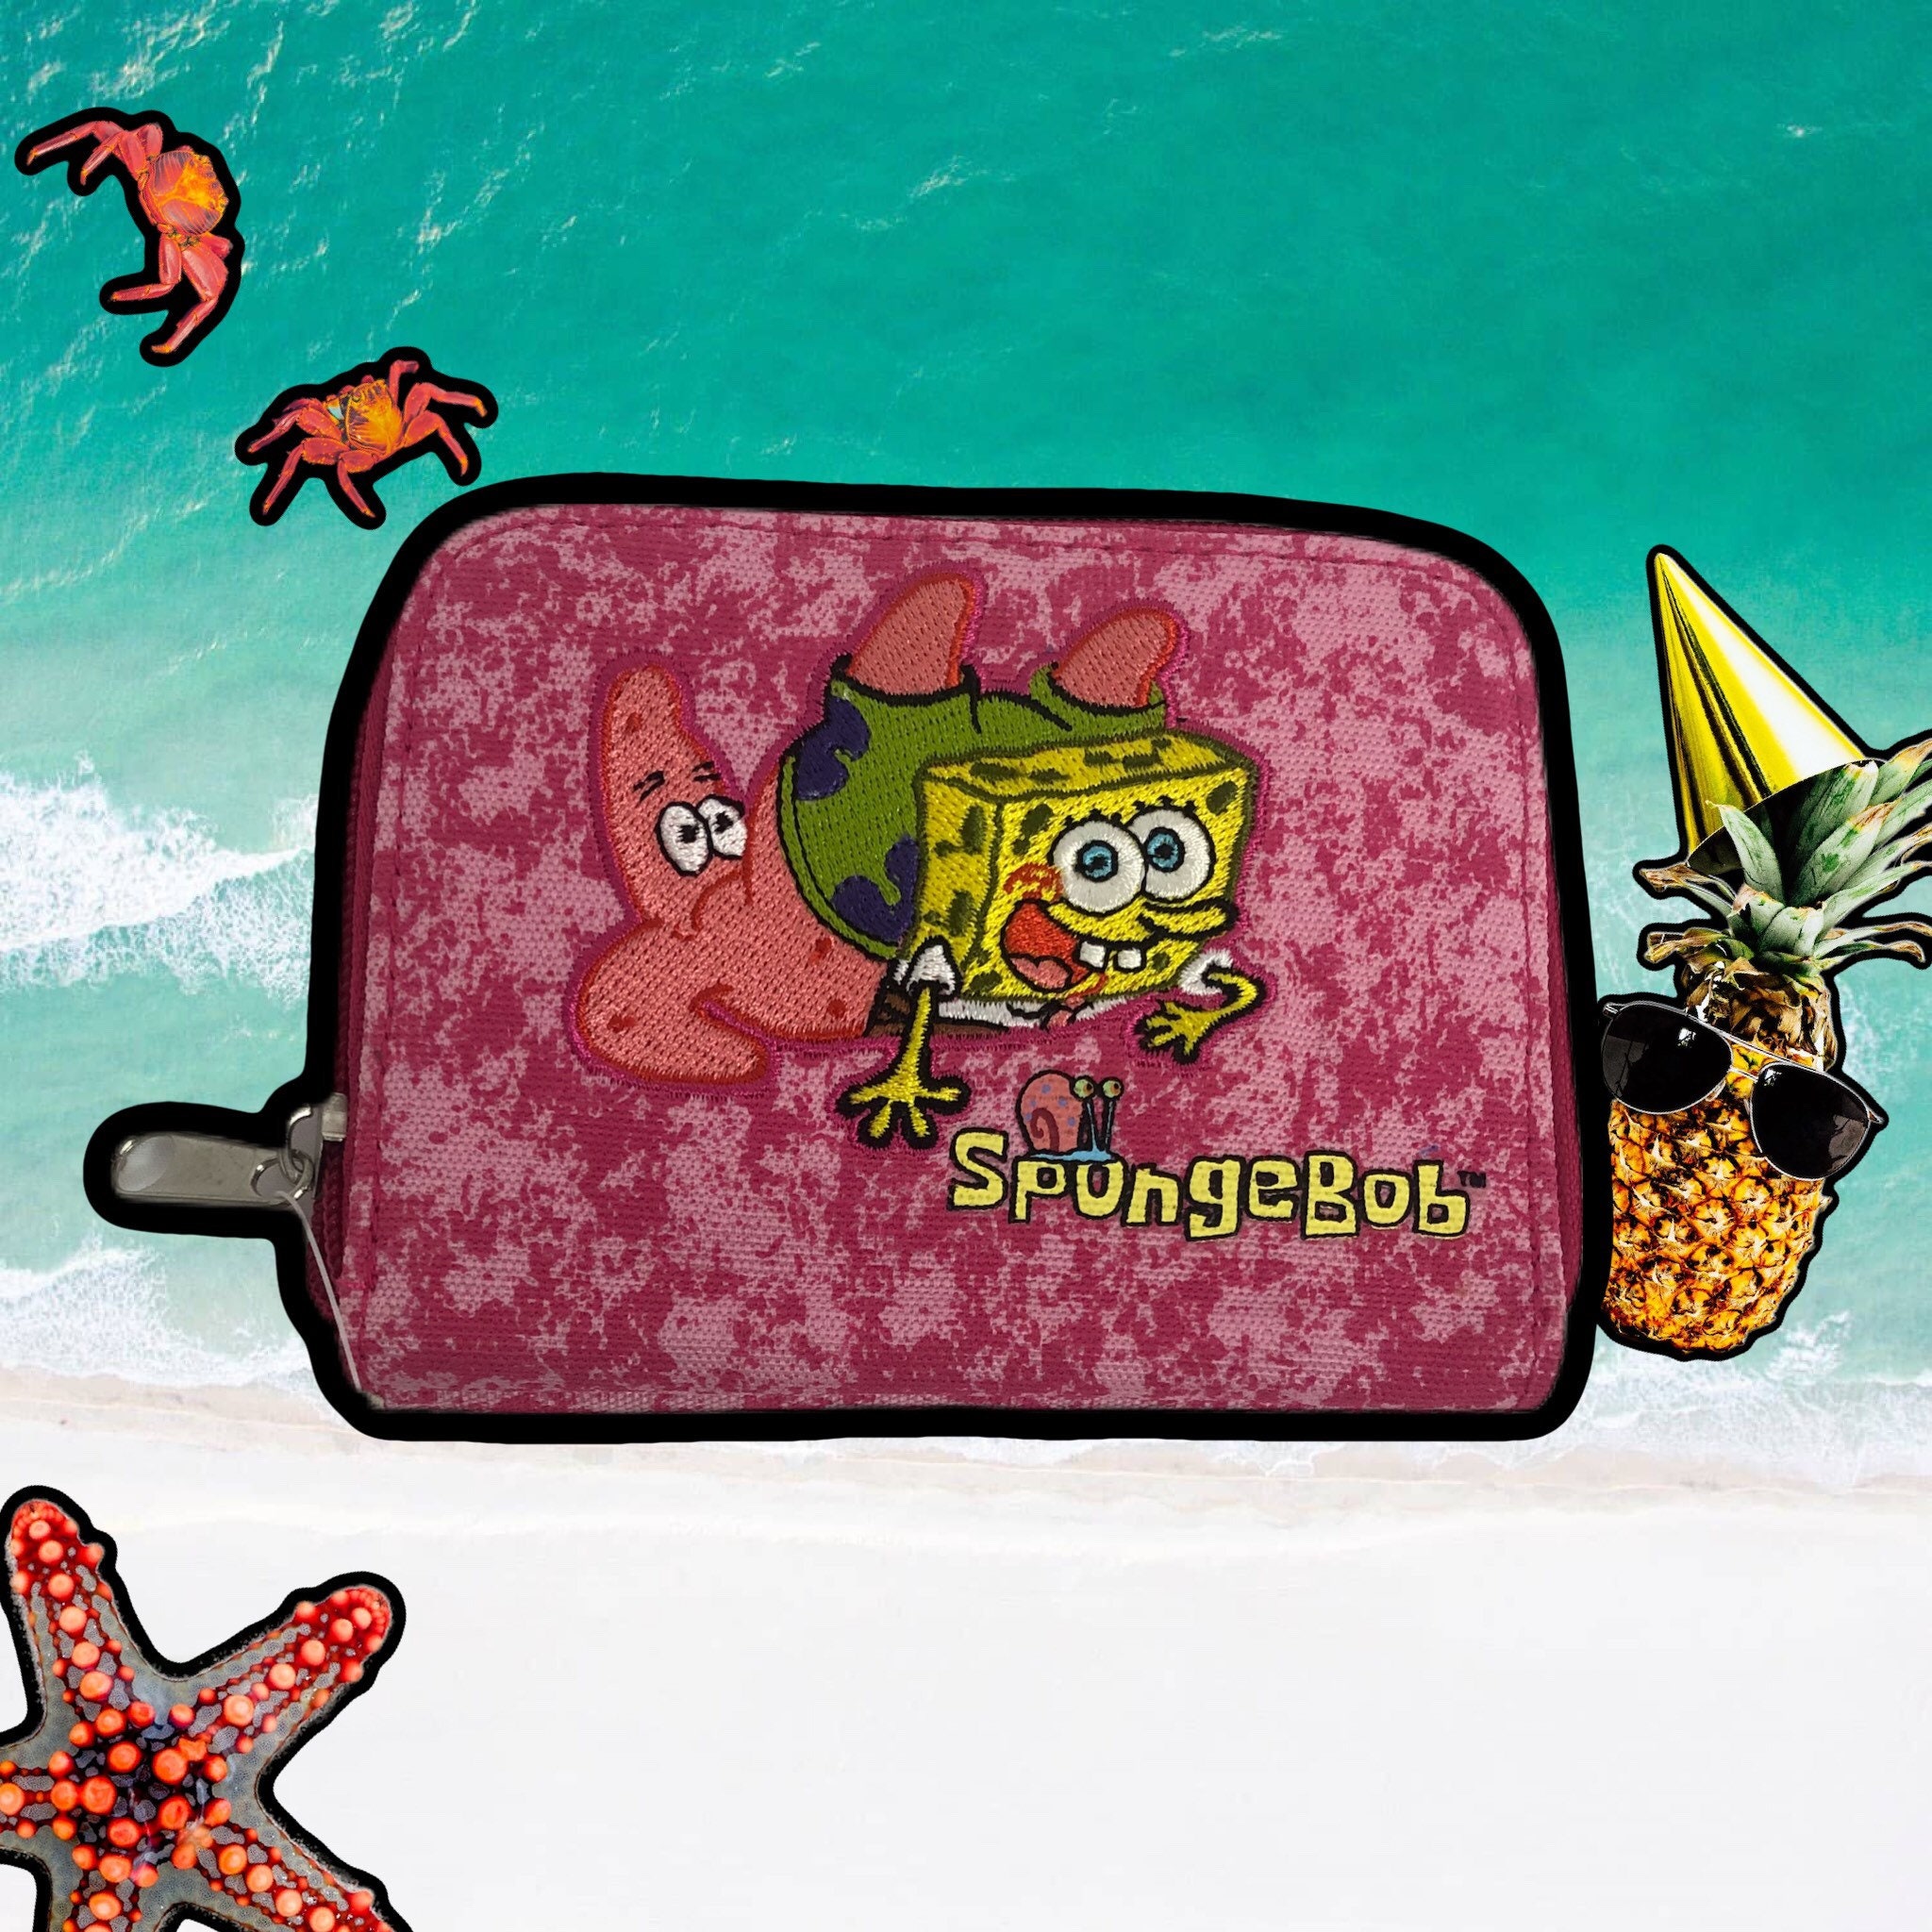 SpongeBob with a purse